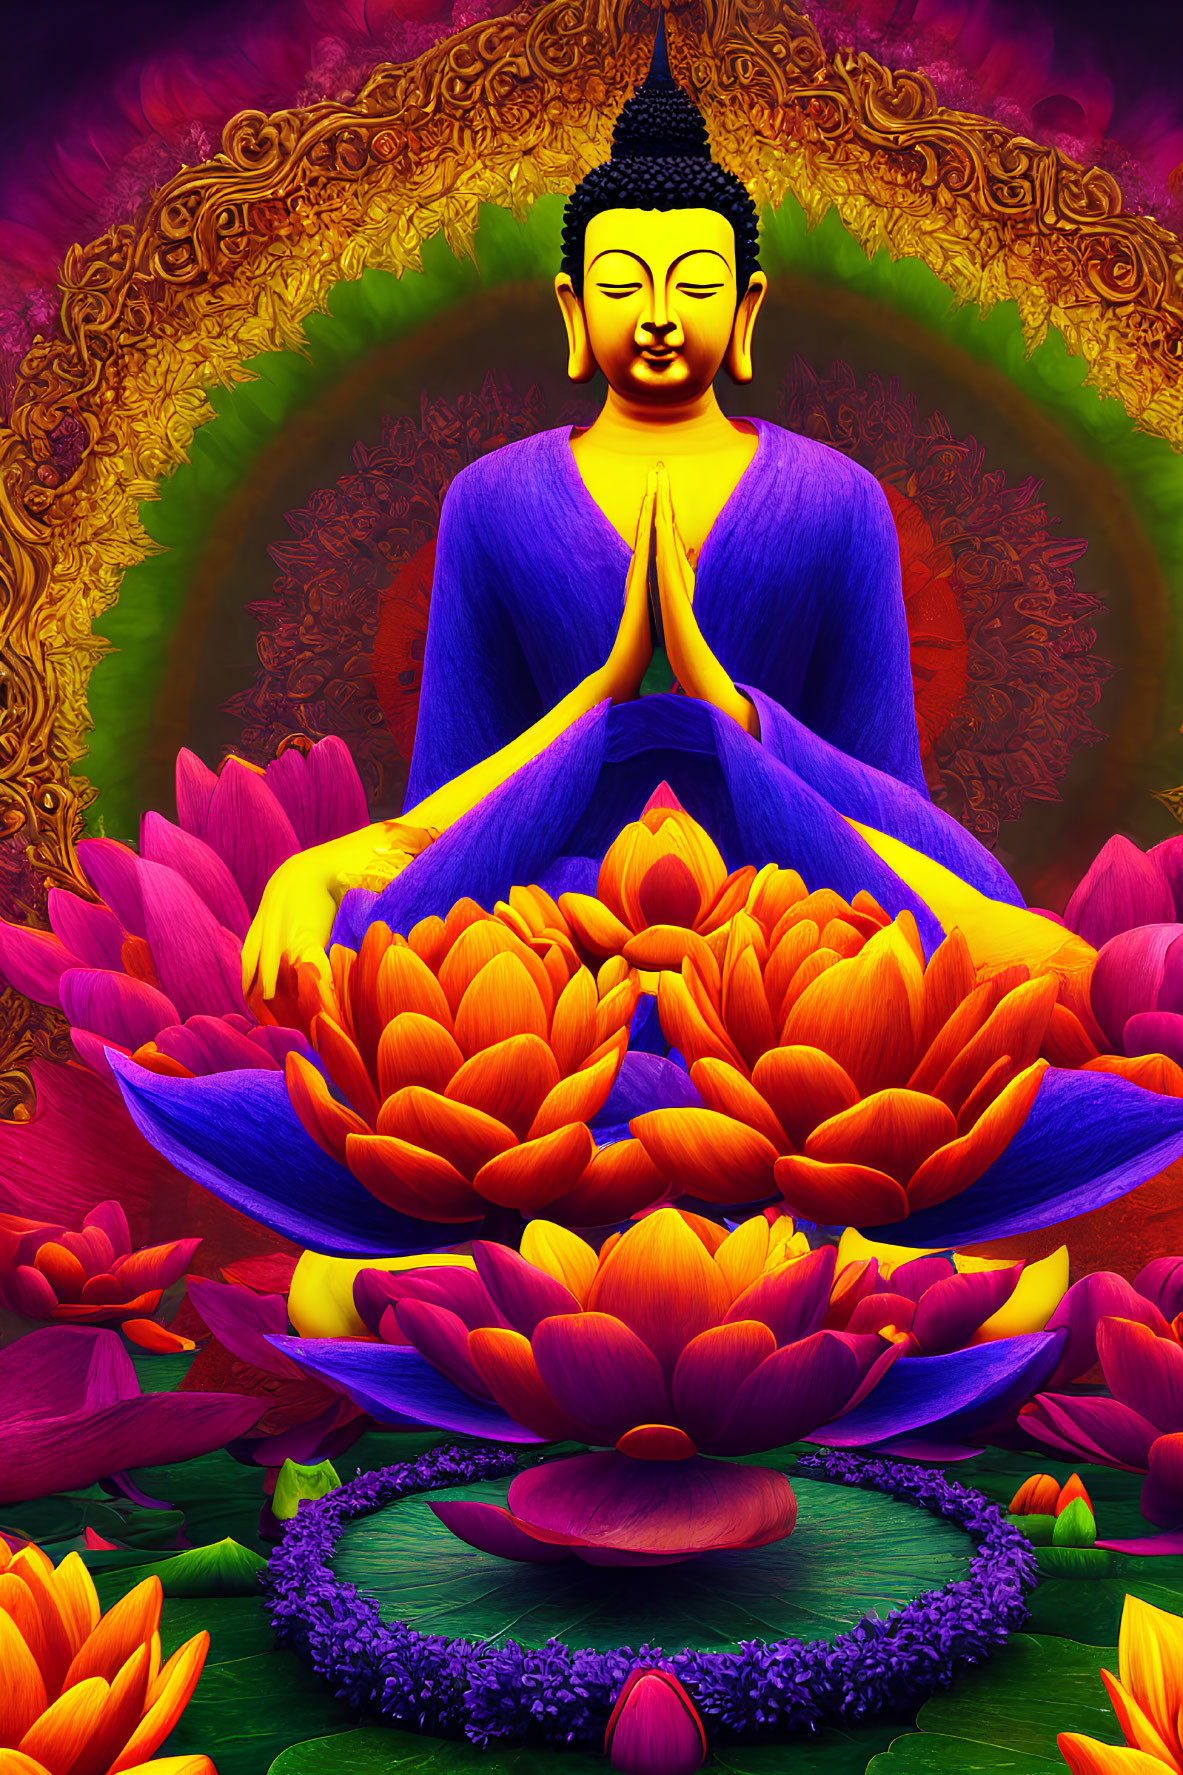 Colorful Meditating Buddha Illustration on Lotus Flowers and Ornate Background